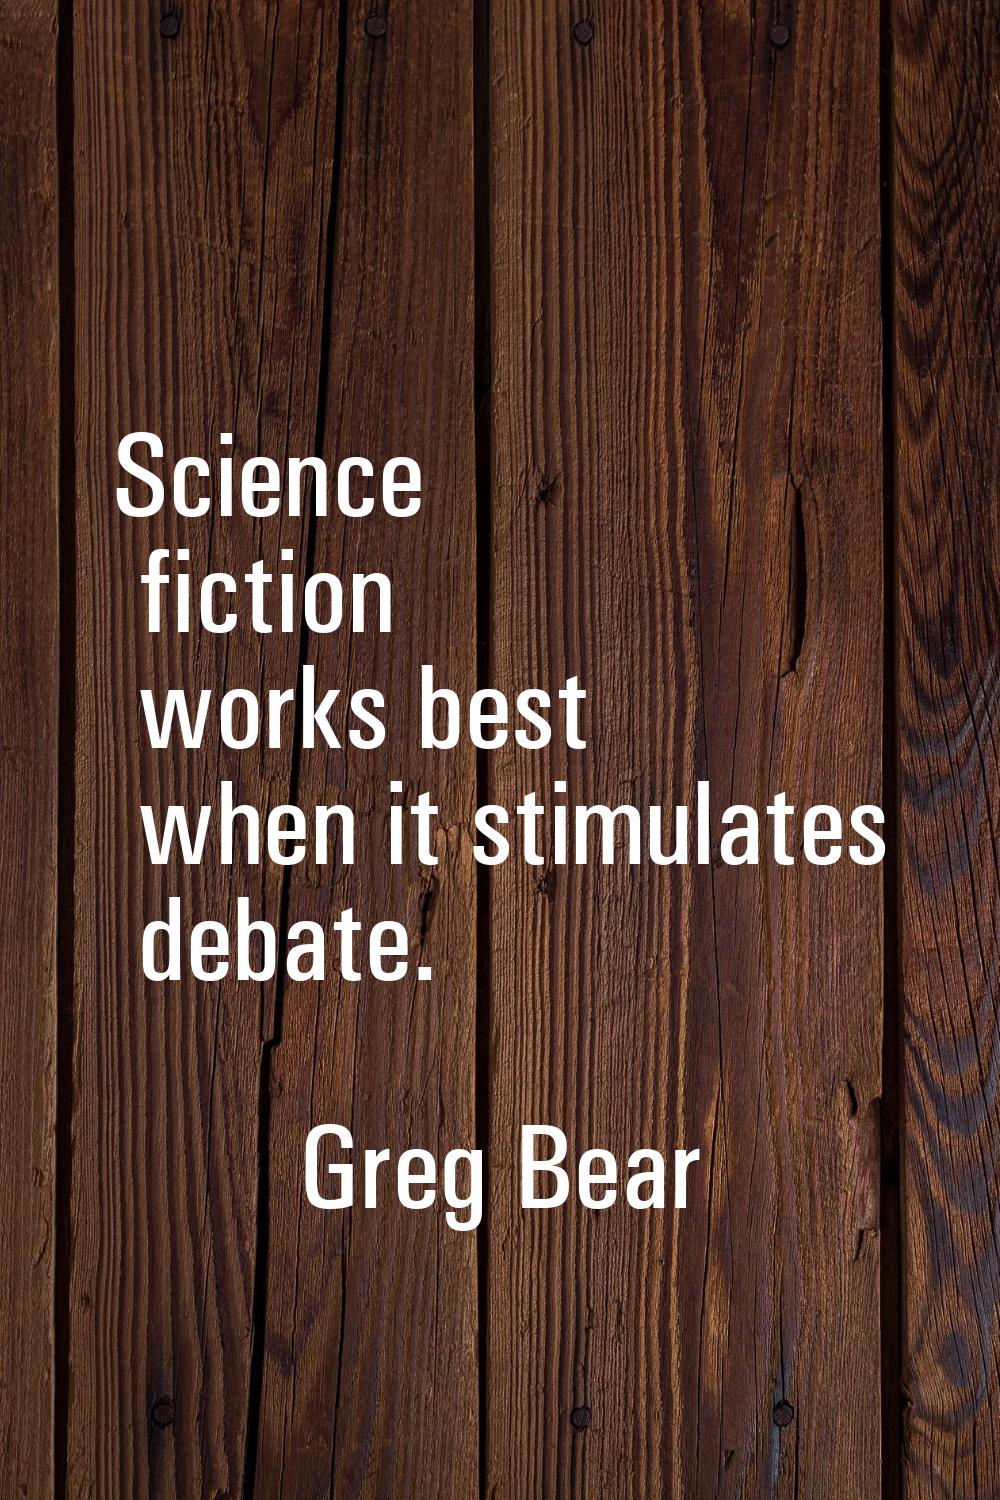 Science fiction works best when it stimulates debate.